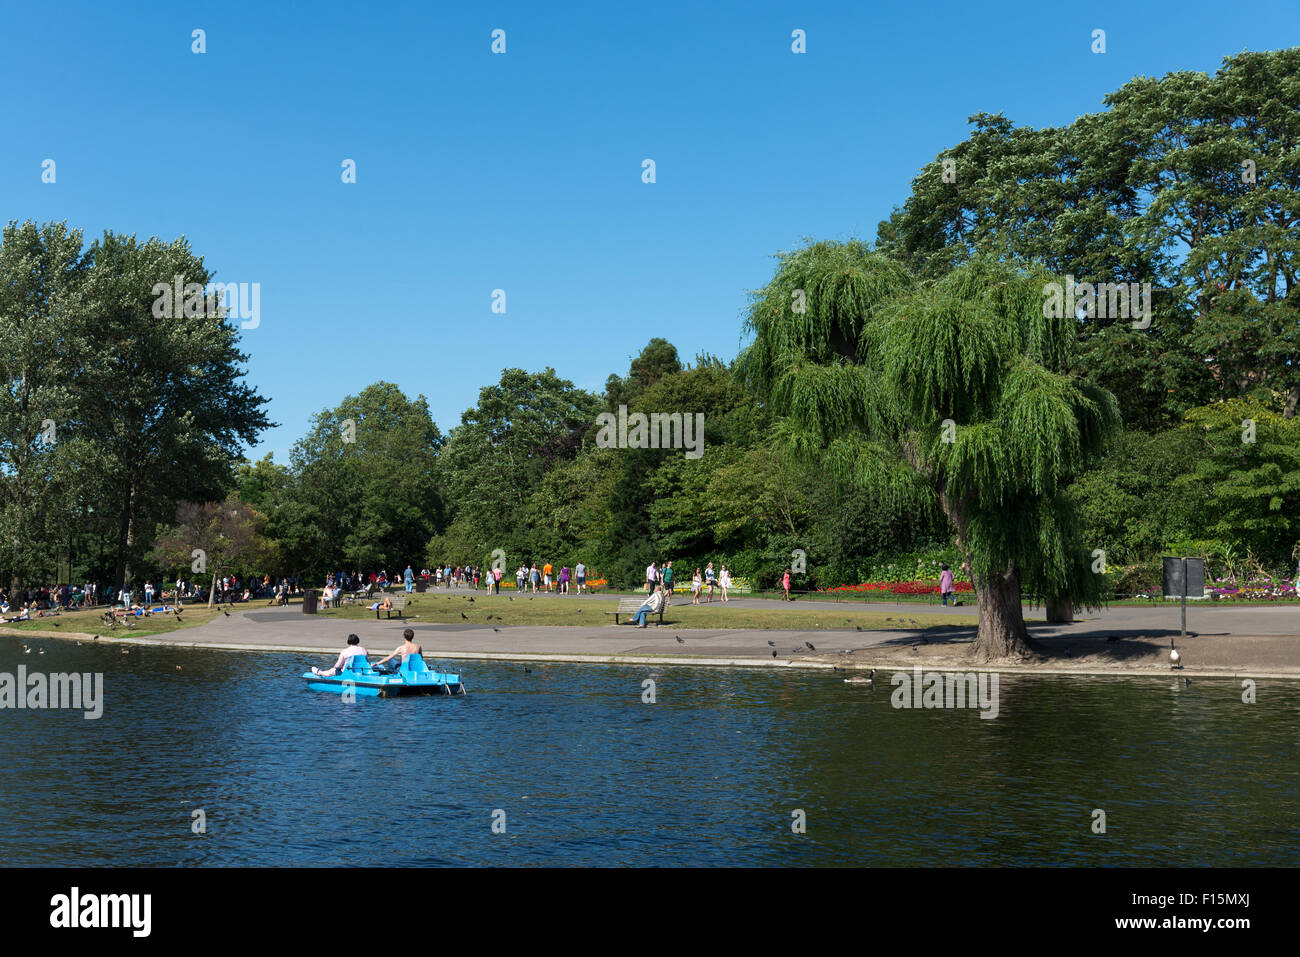 The boating lake in Regent's Park, London, England, UK Stock Photo